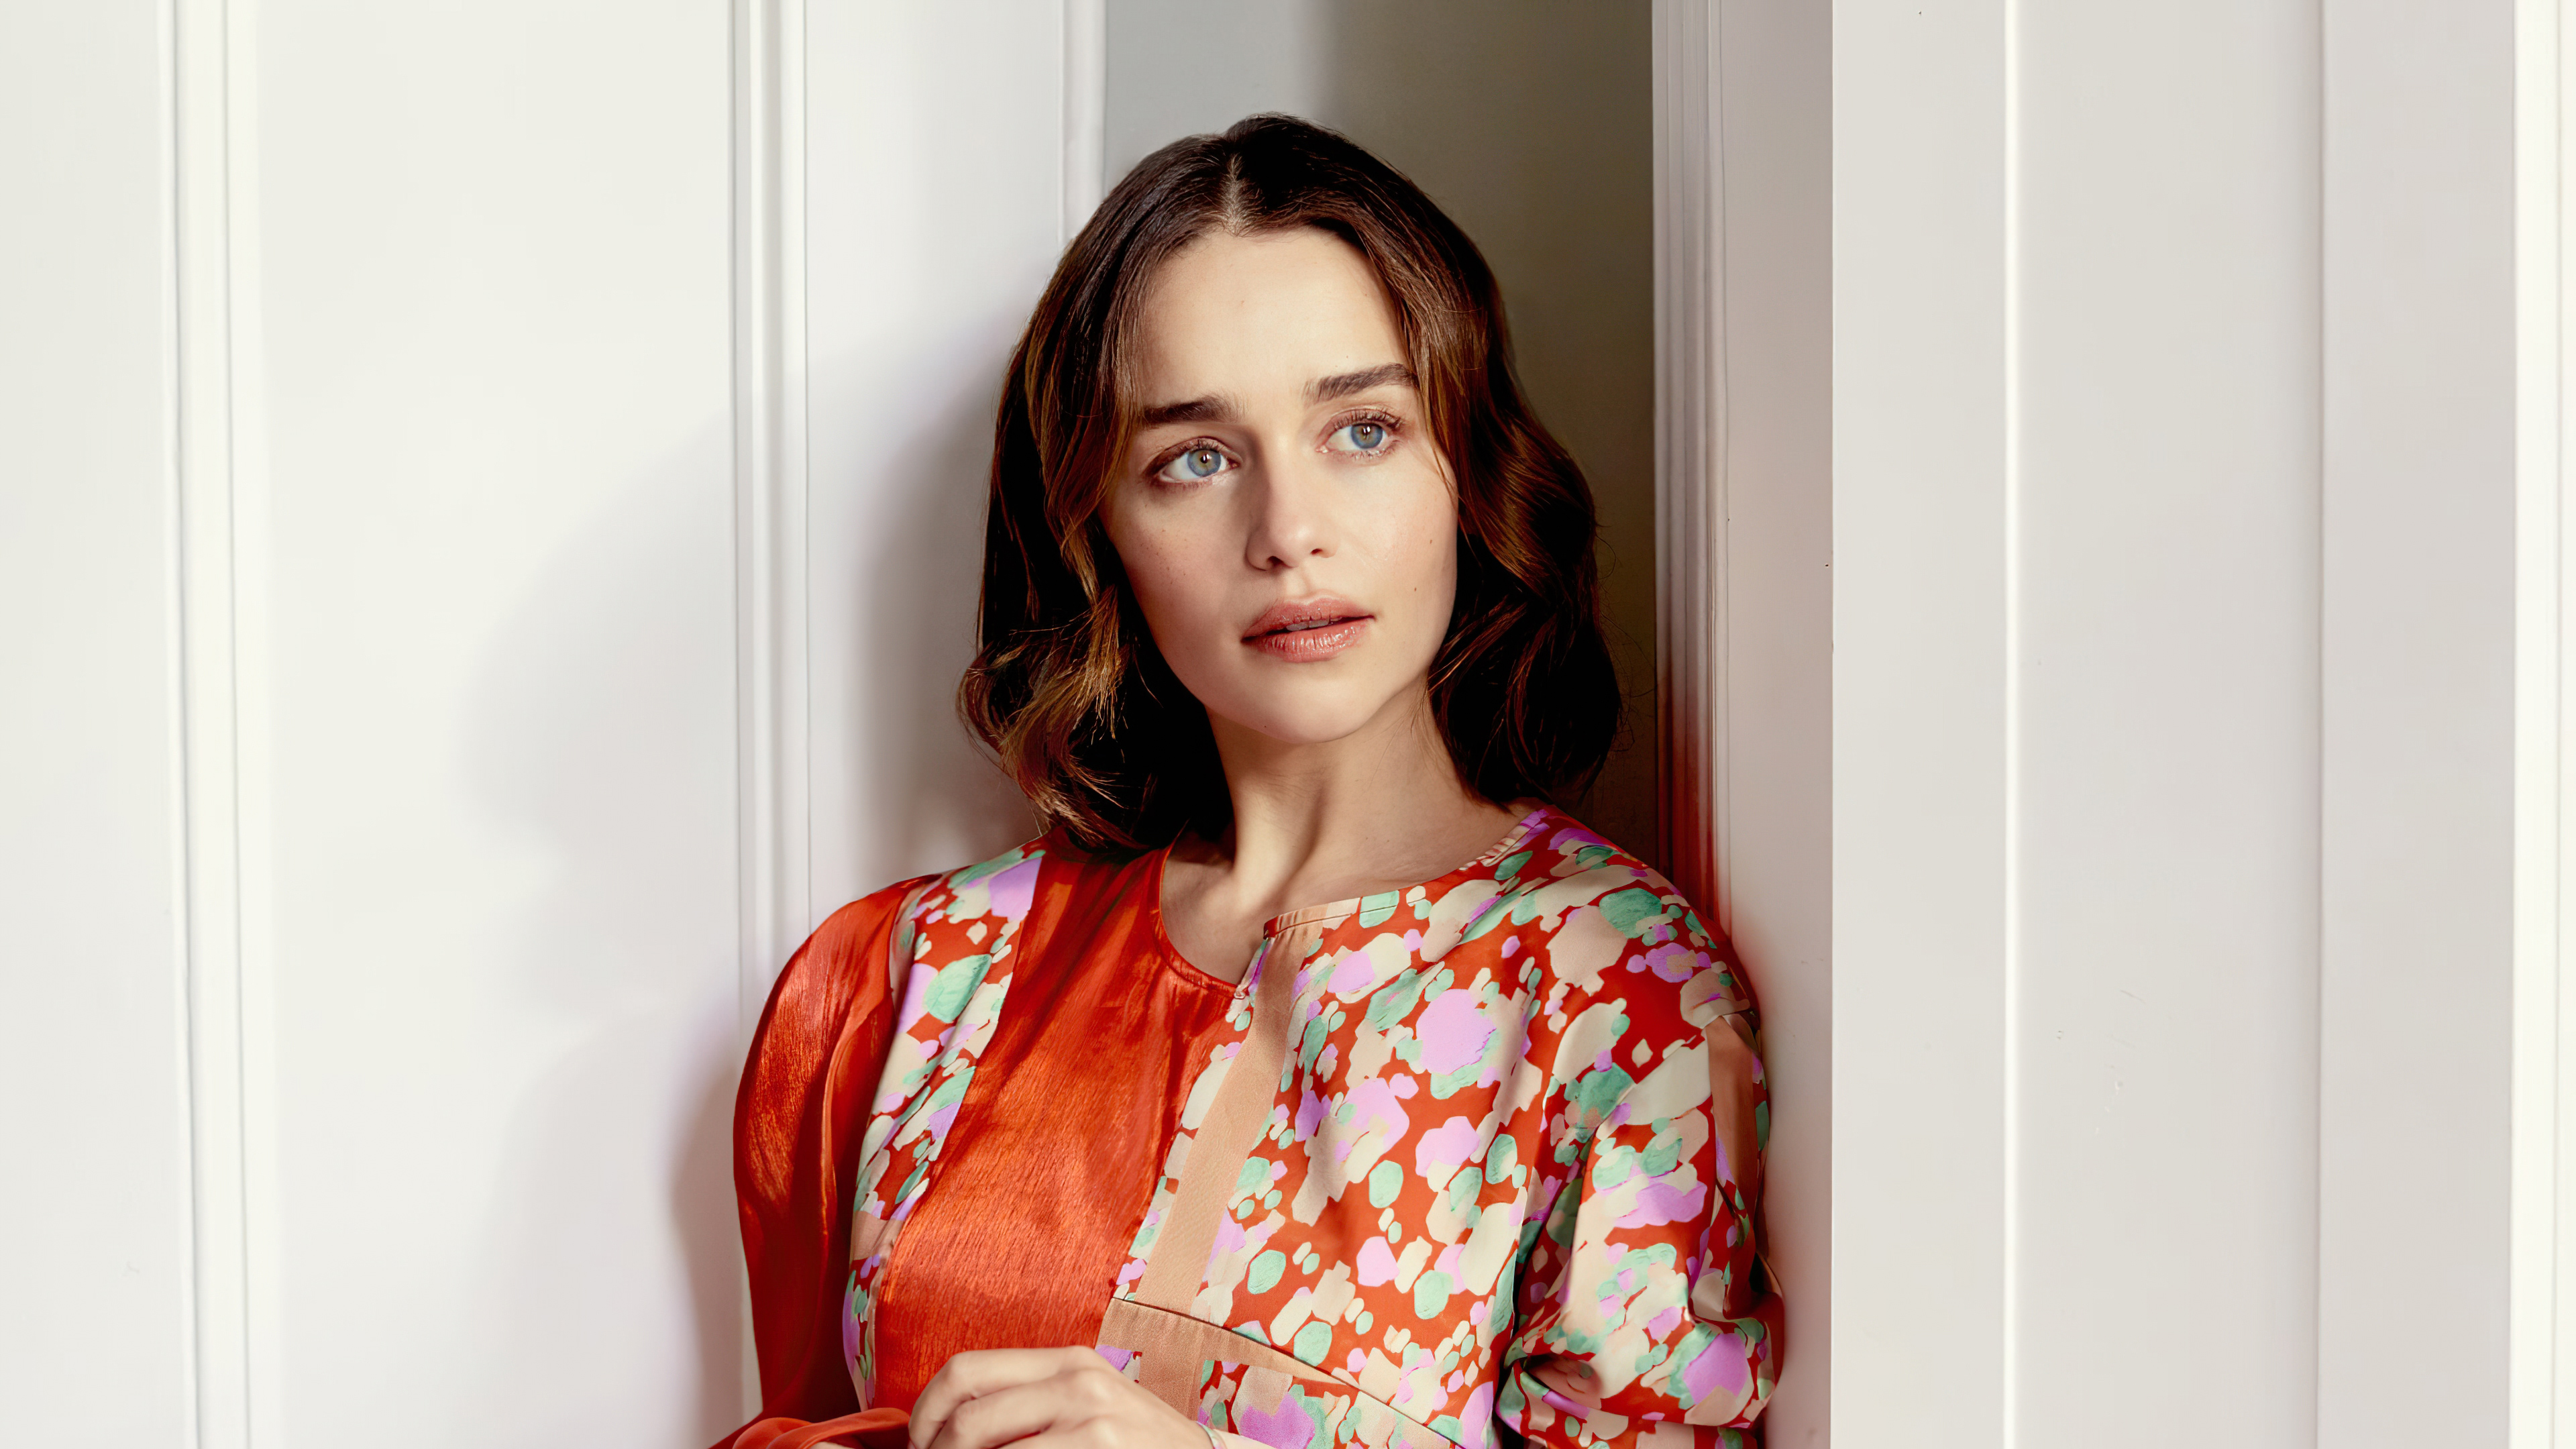 Emilia Clarke Flare Photoshoot Wallpapers